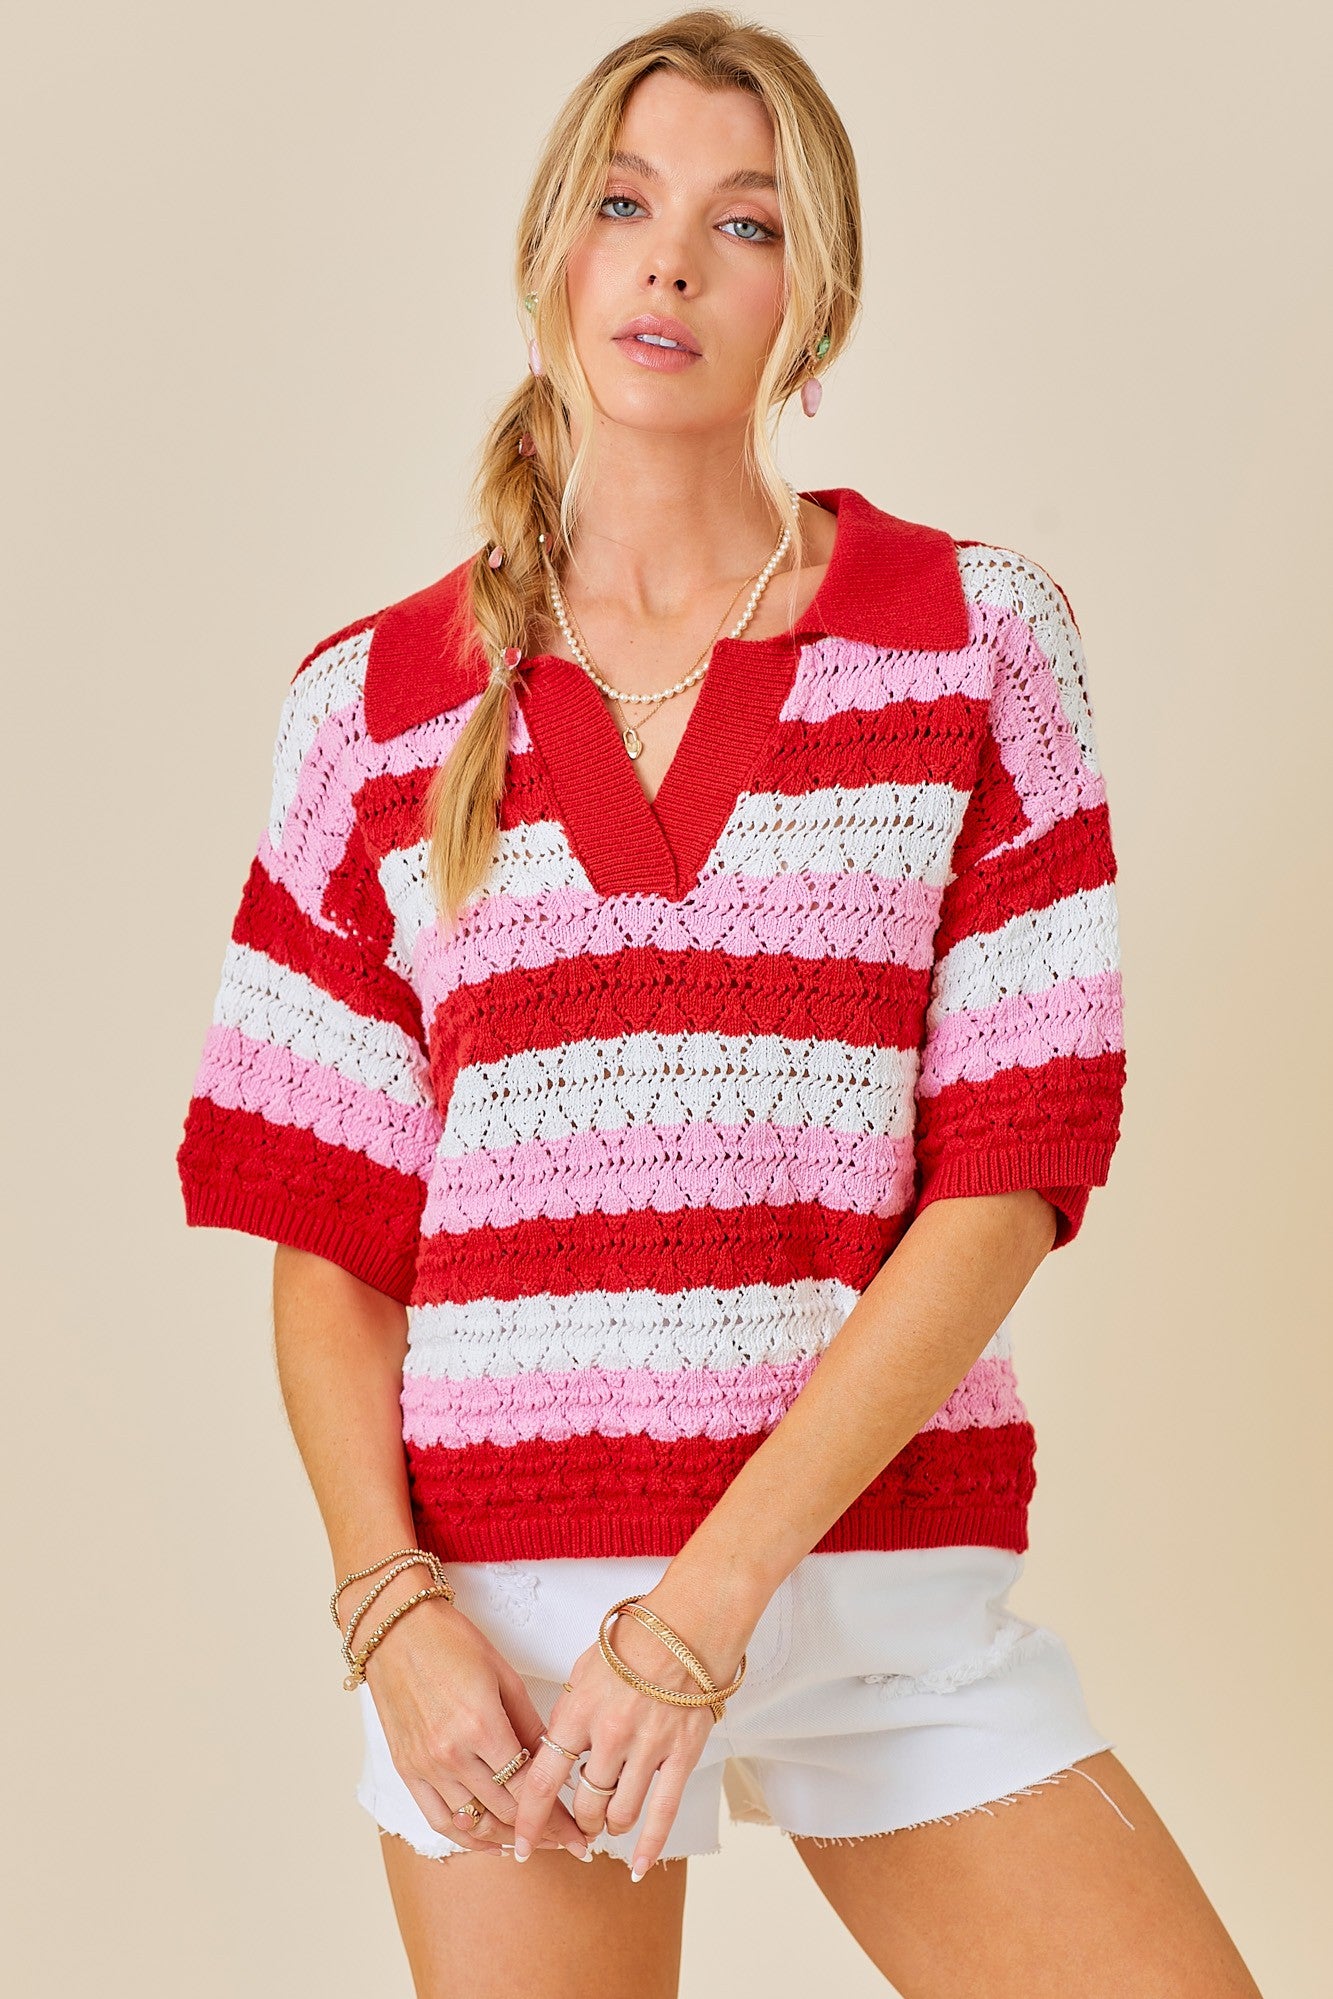 Charming Stripe Sweater